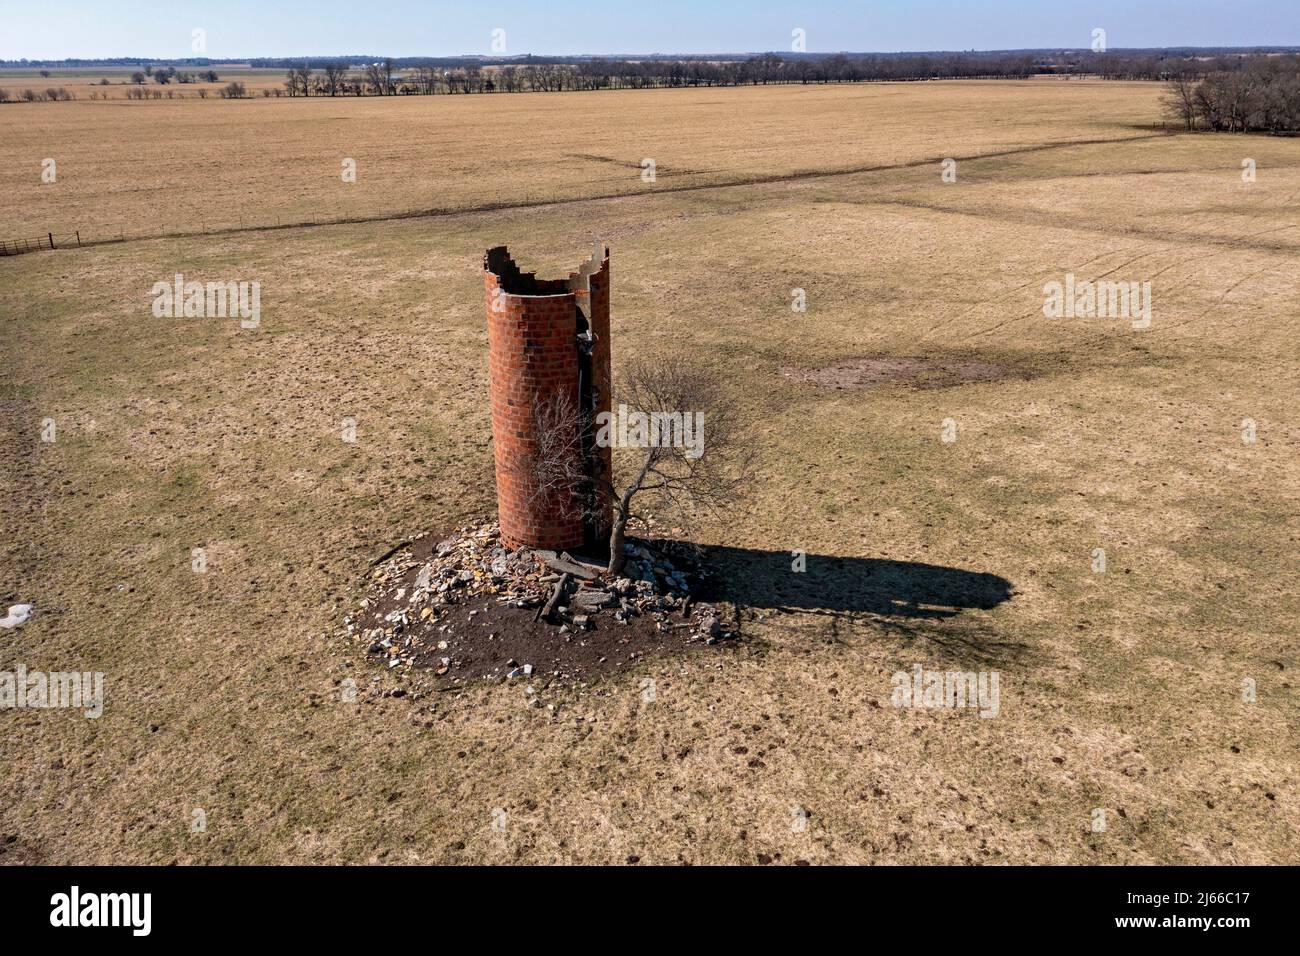 Bartlett, Kansas - An old, crumbling silo on a farm in southeastern Kansas. Stock Photo